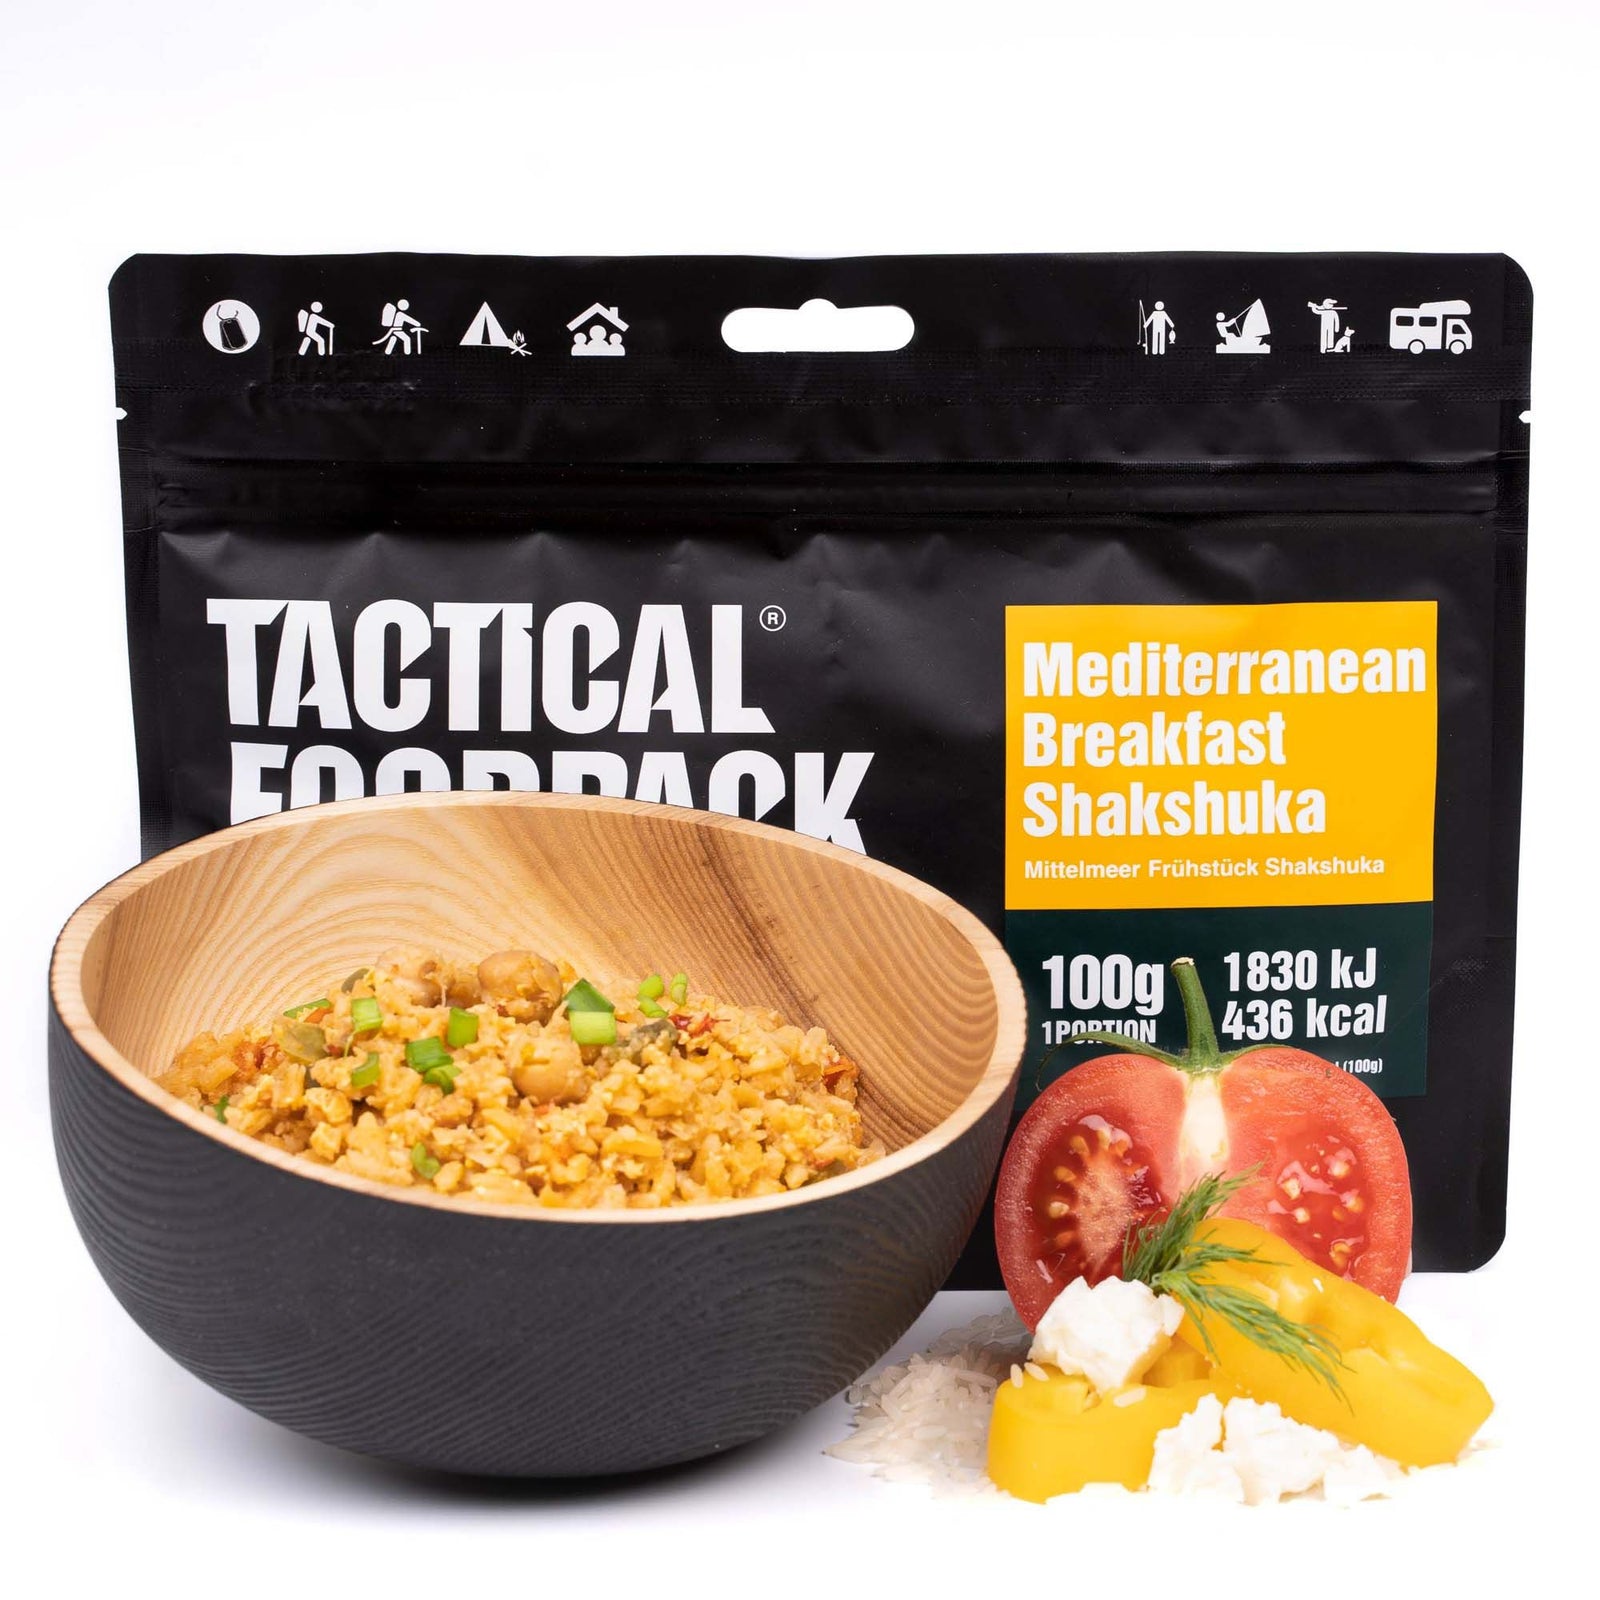 Tactical Foodpack | Mediterranean Breakfast Shakshuka 100g - Colazione Shakshuka mediterranea